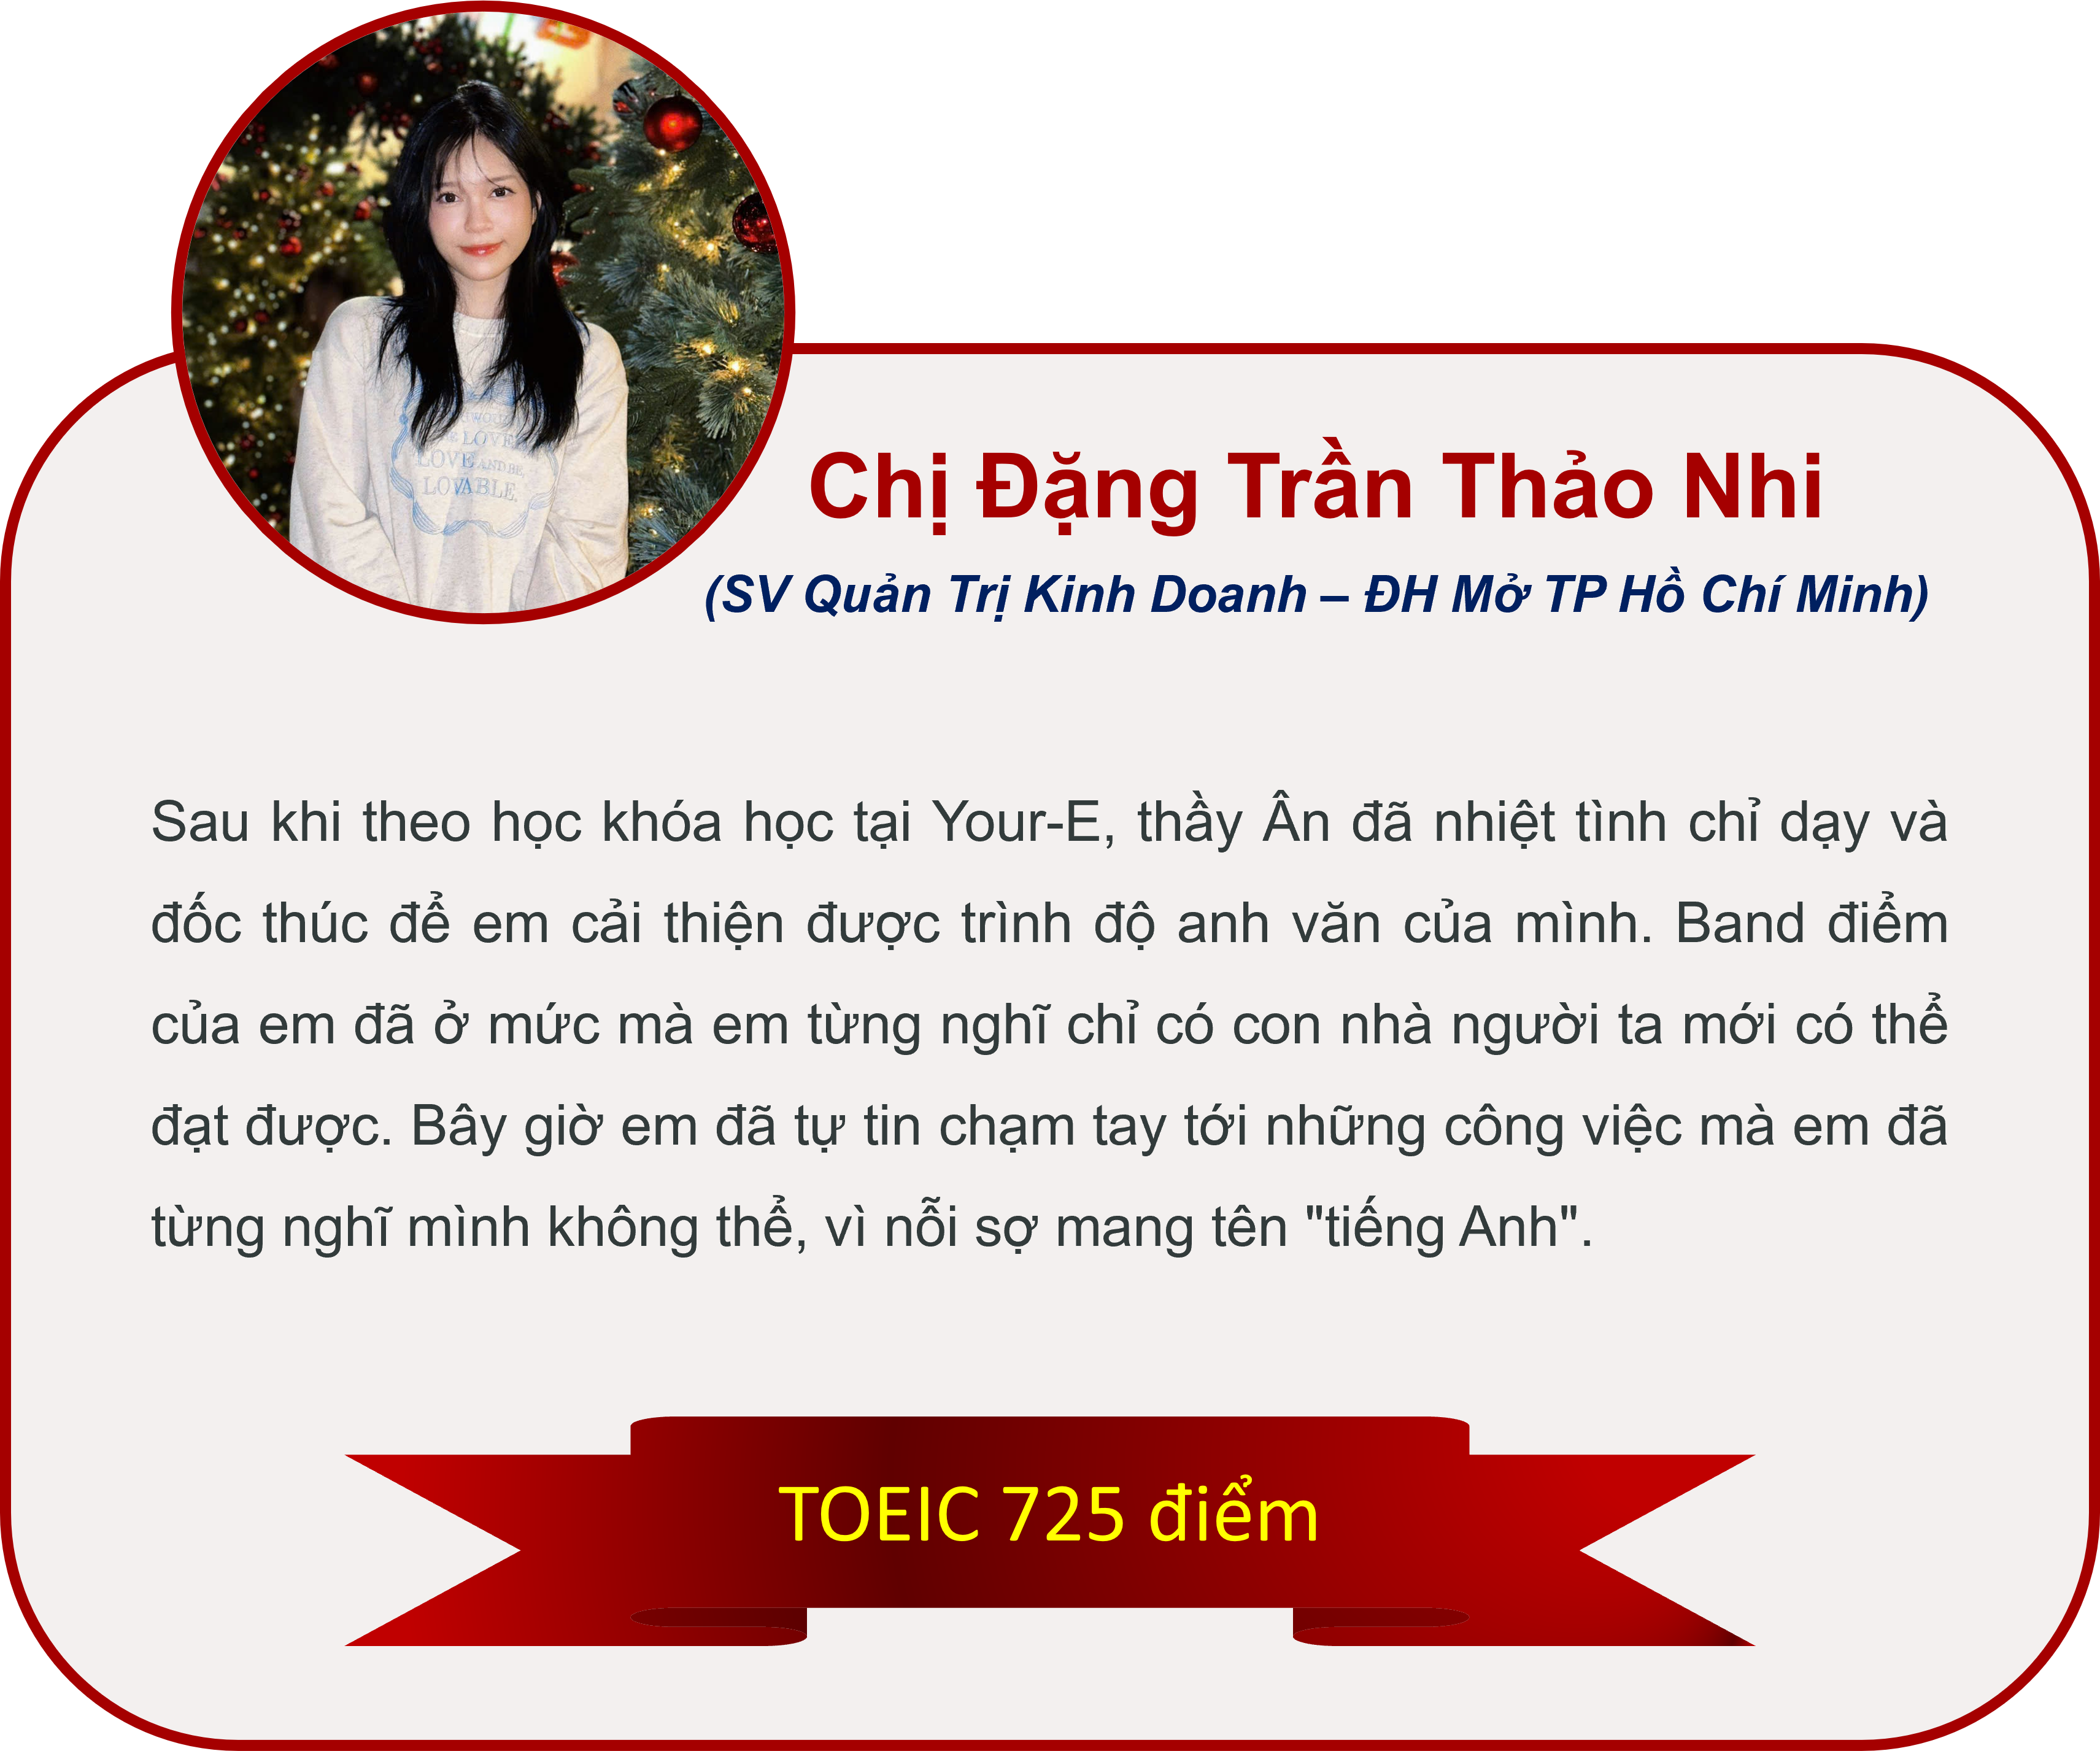 Dang Tran Thao Nhi